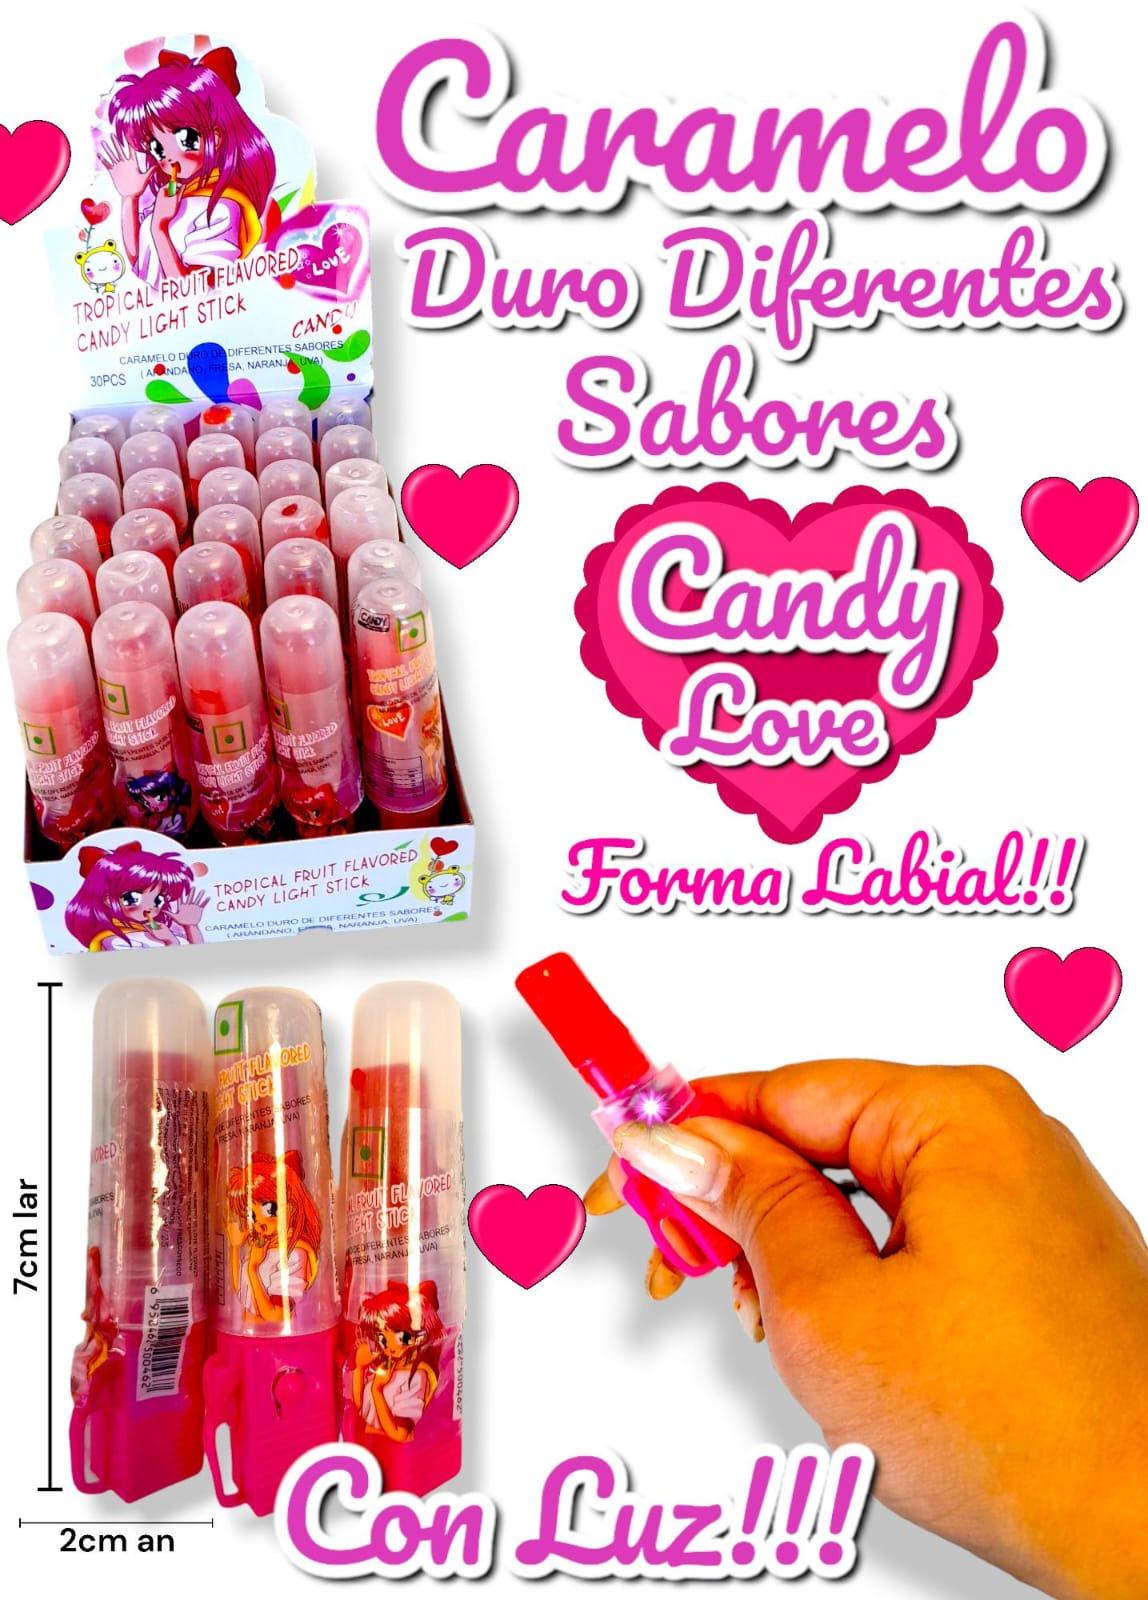 Caramelo Duro Diferentes Sabores CANDY LOVE Forma Labial CON LUZ !!!